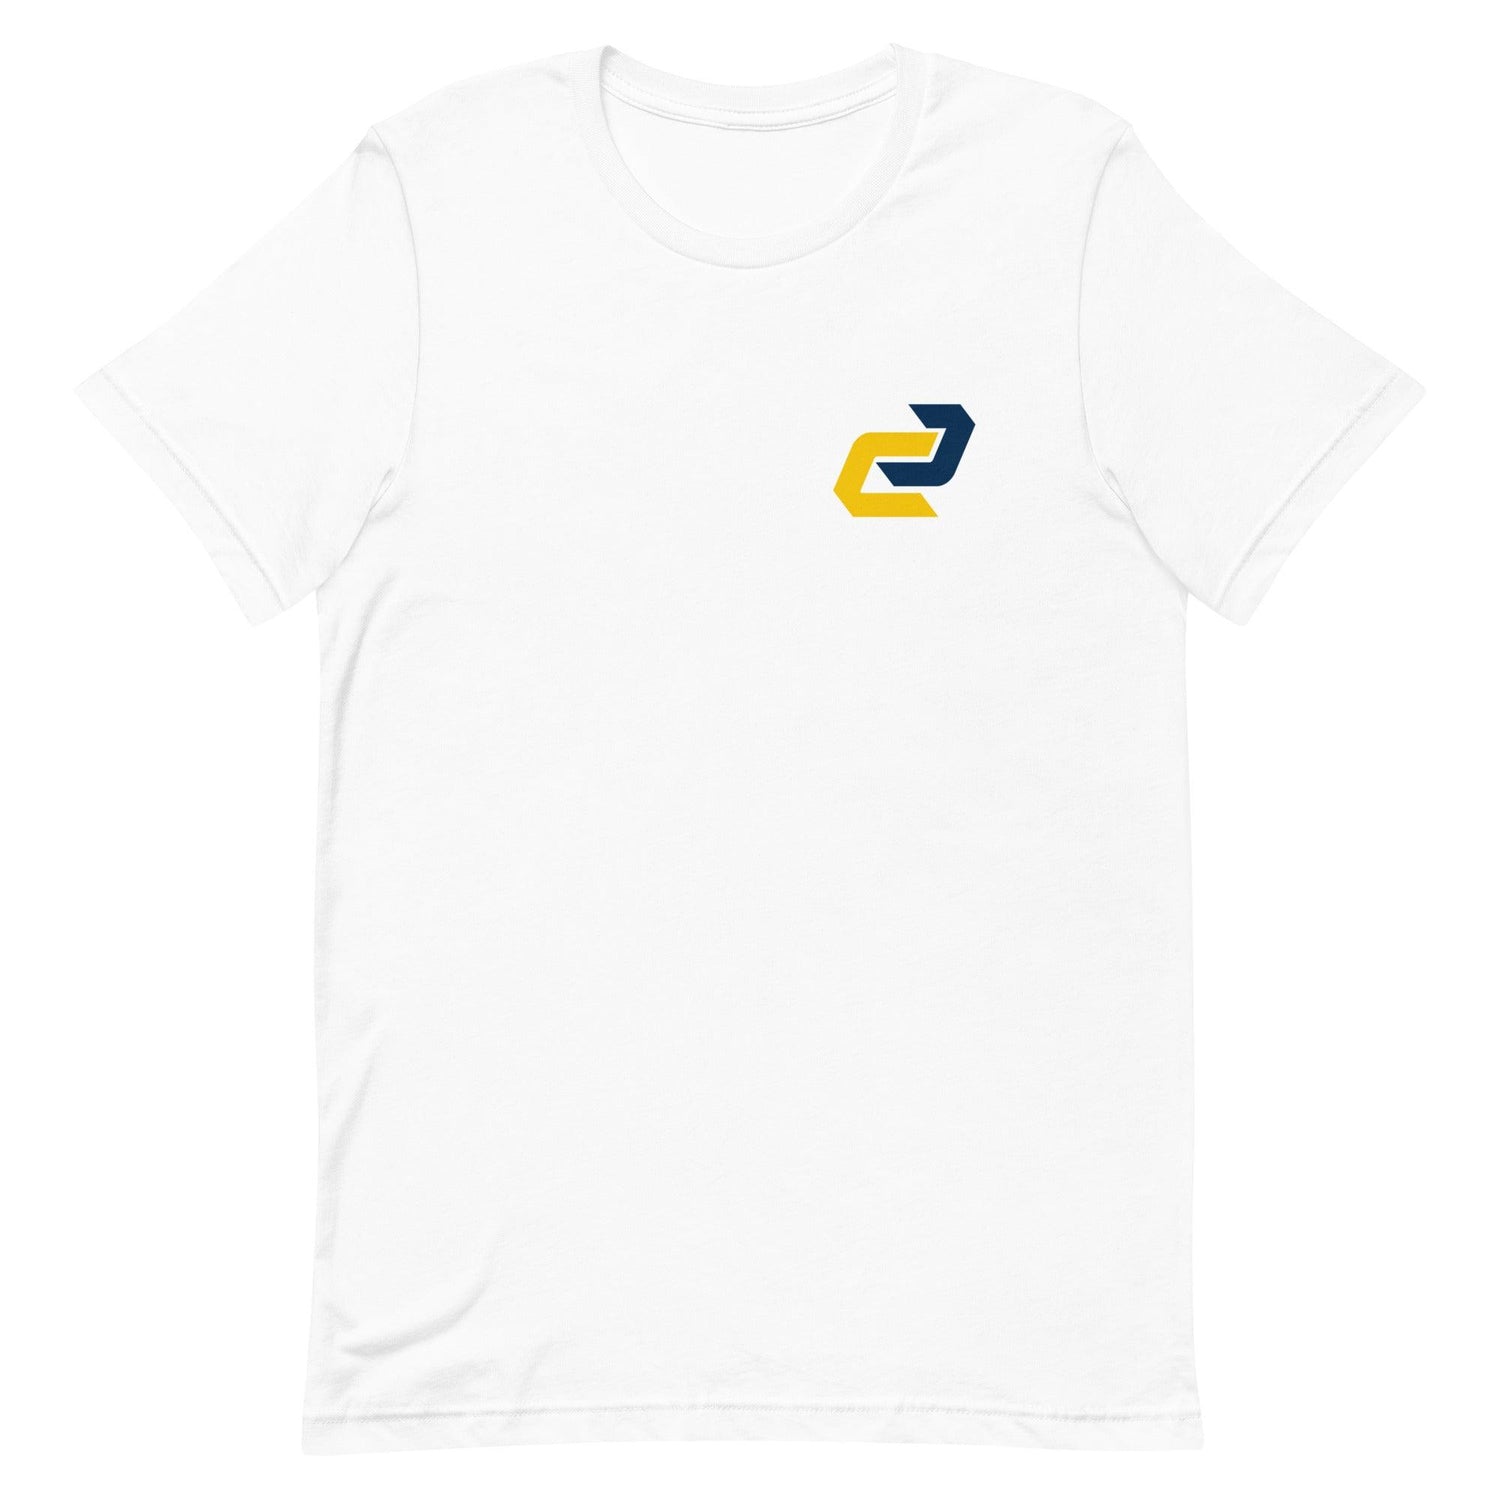 CJ Stokes "Essential" t-shirt - Fan Arch